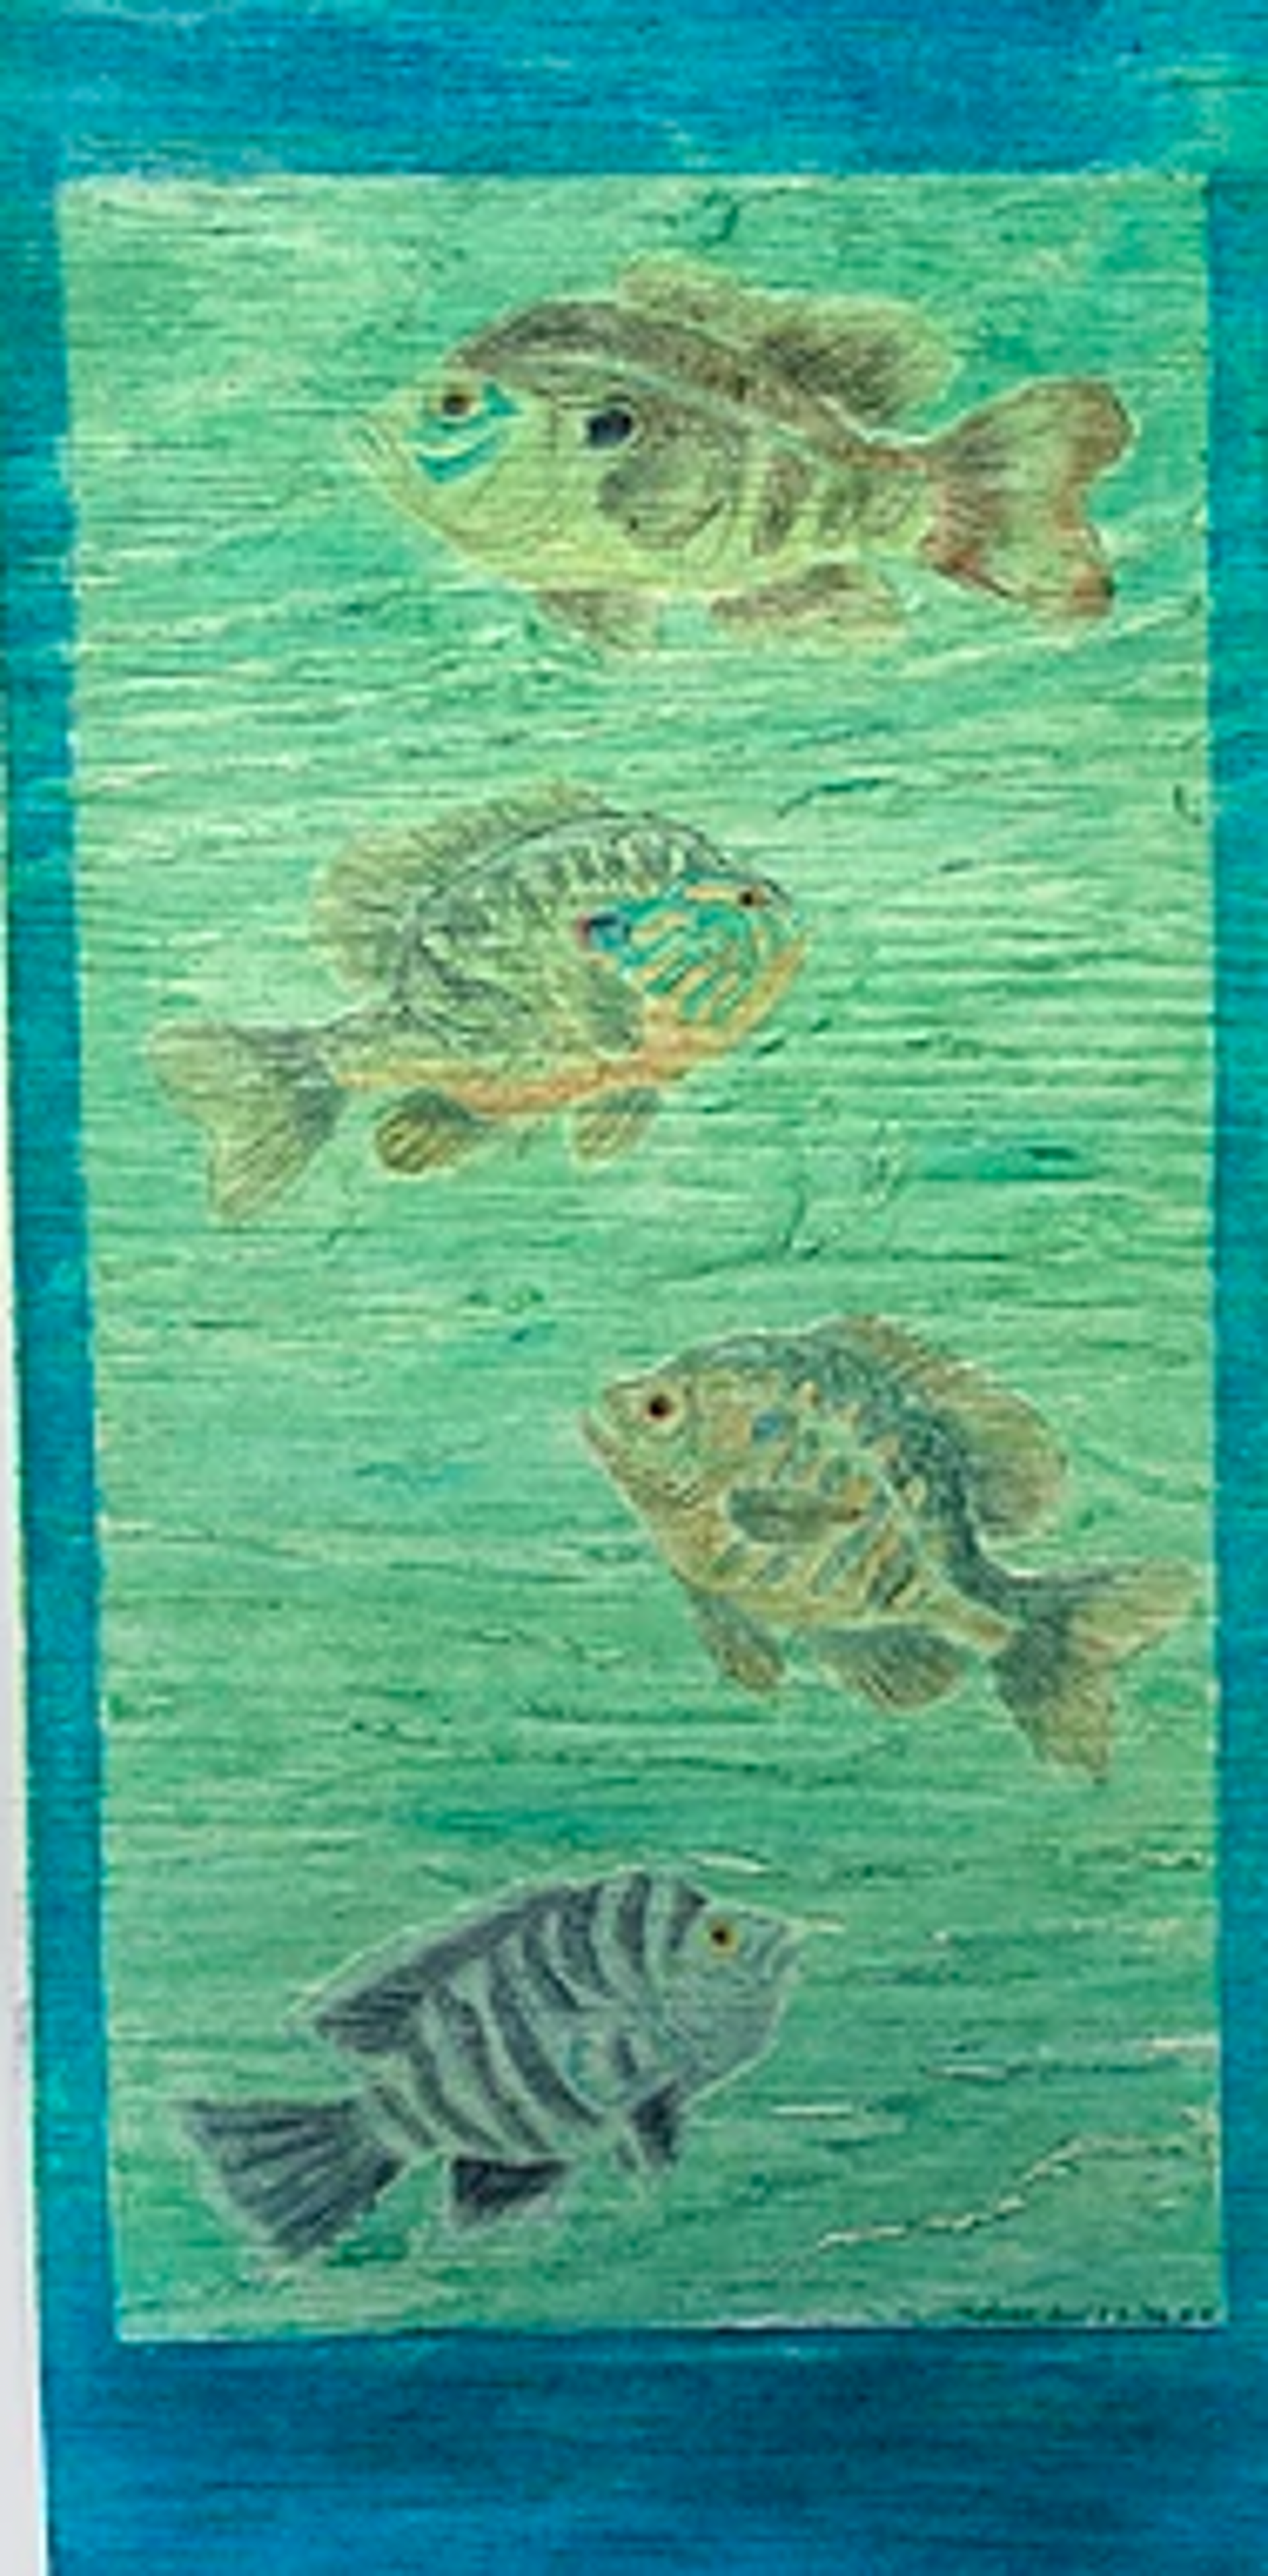 Sunfish of the Pedernales by David Hefner